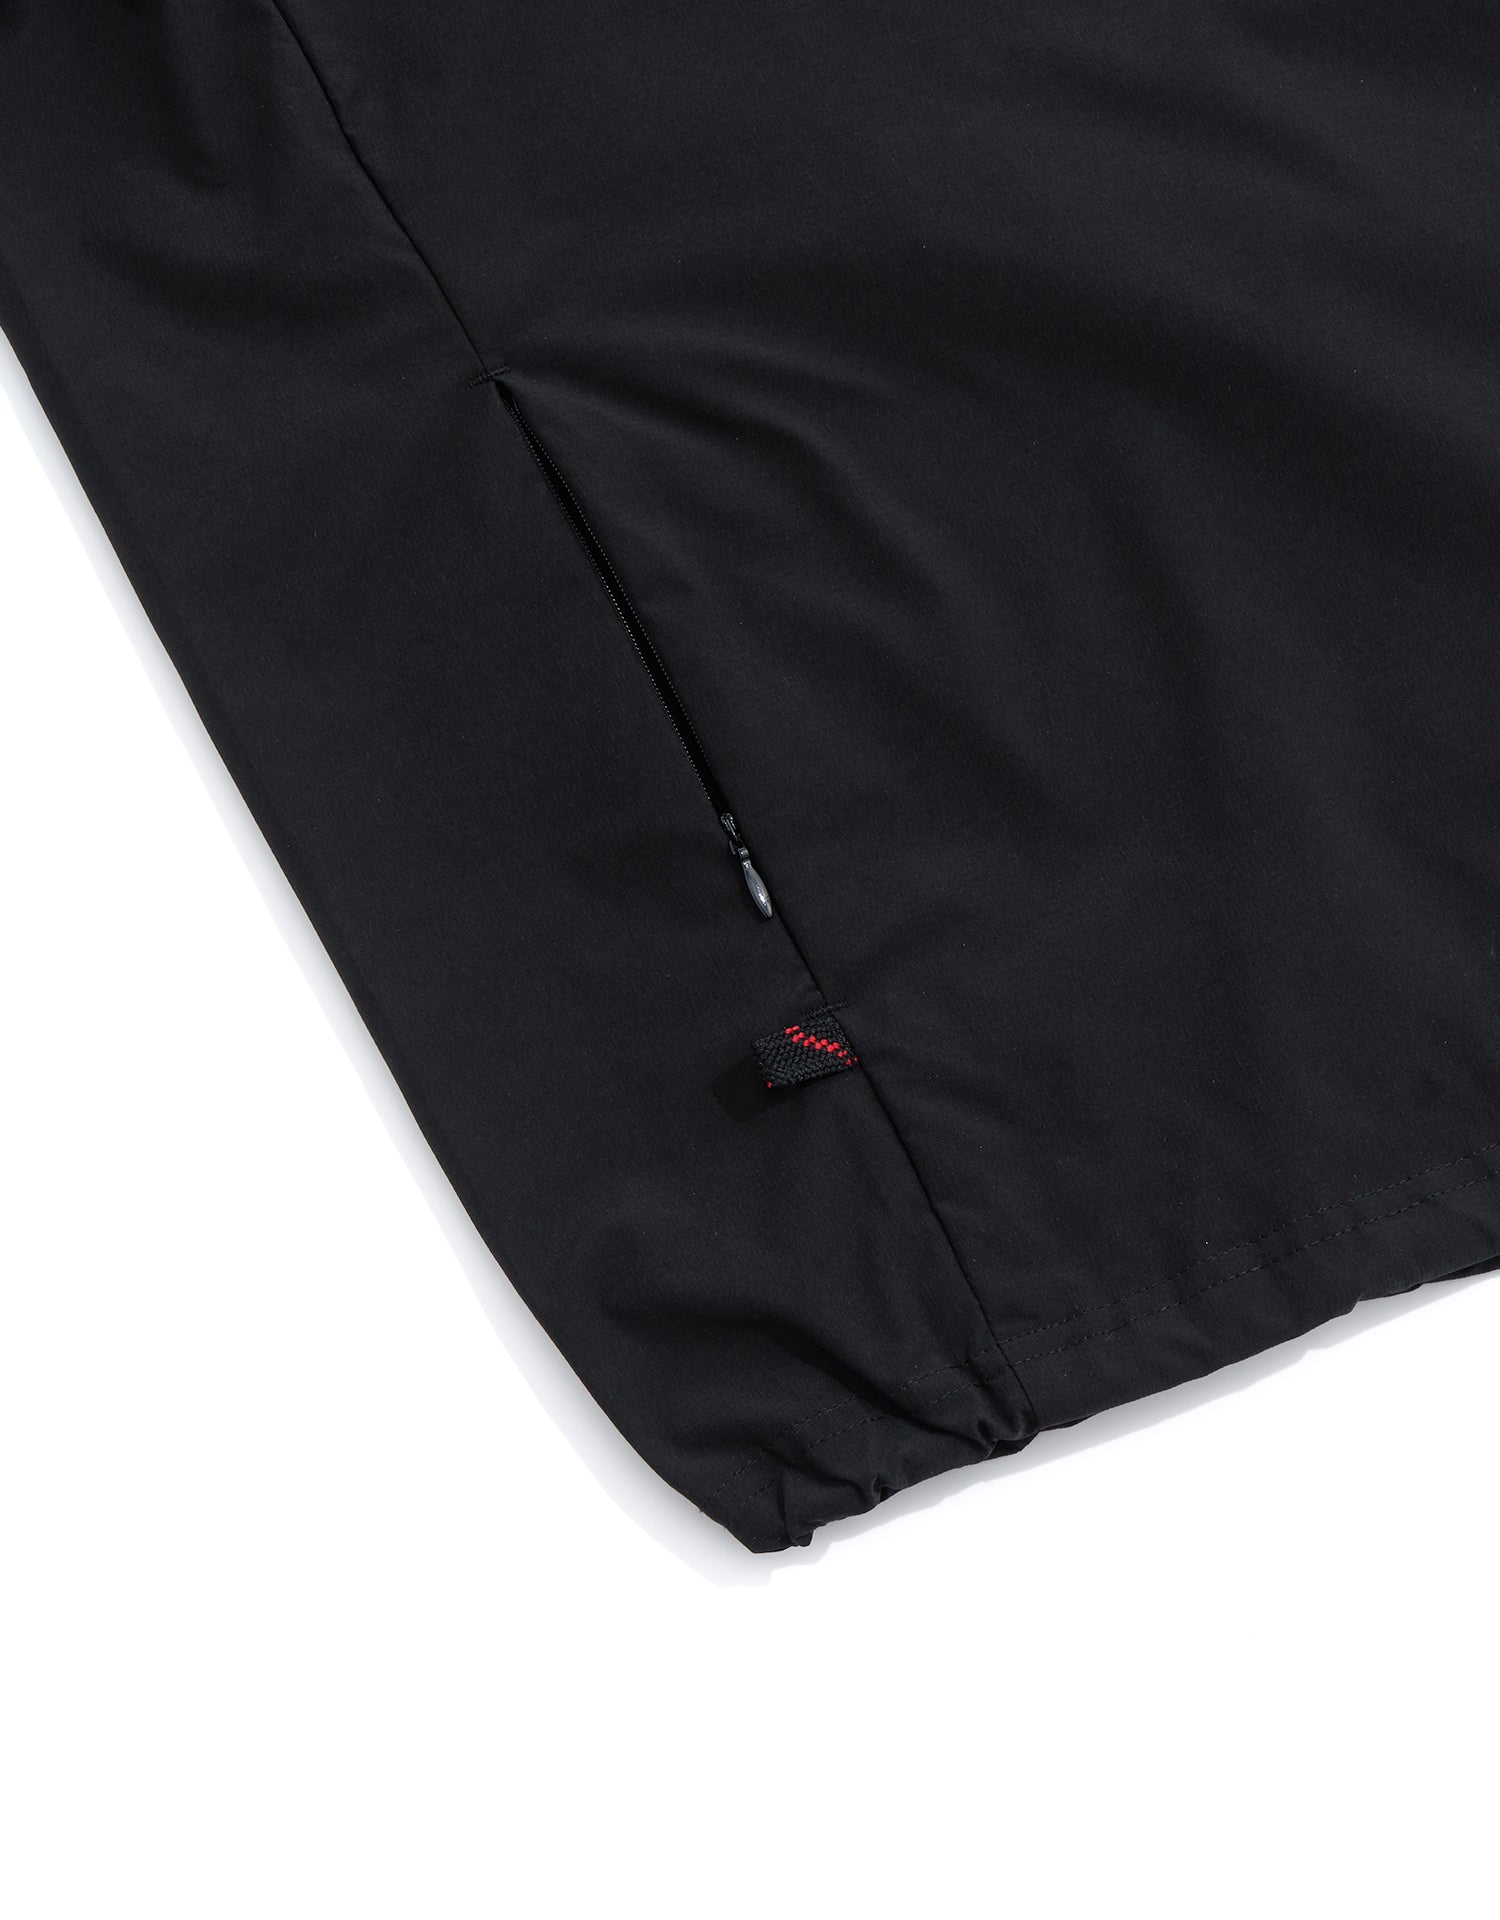 TopBasics Four Pockets Utility Long Sleeve T-Shirt